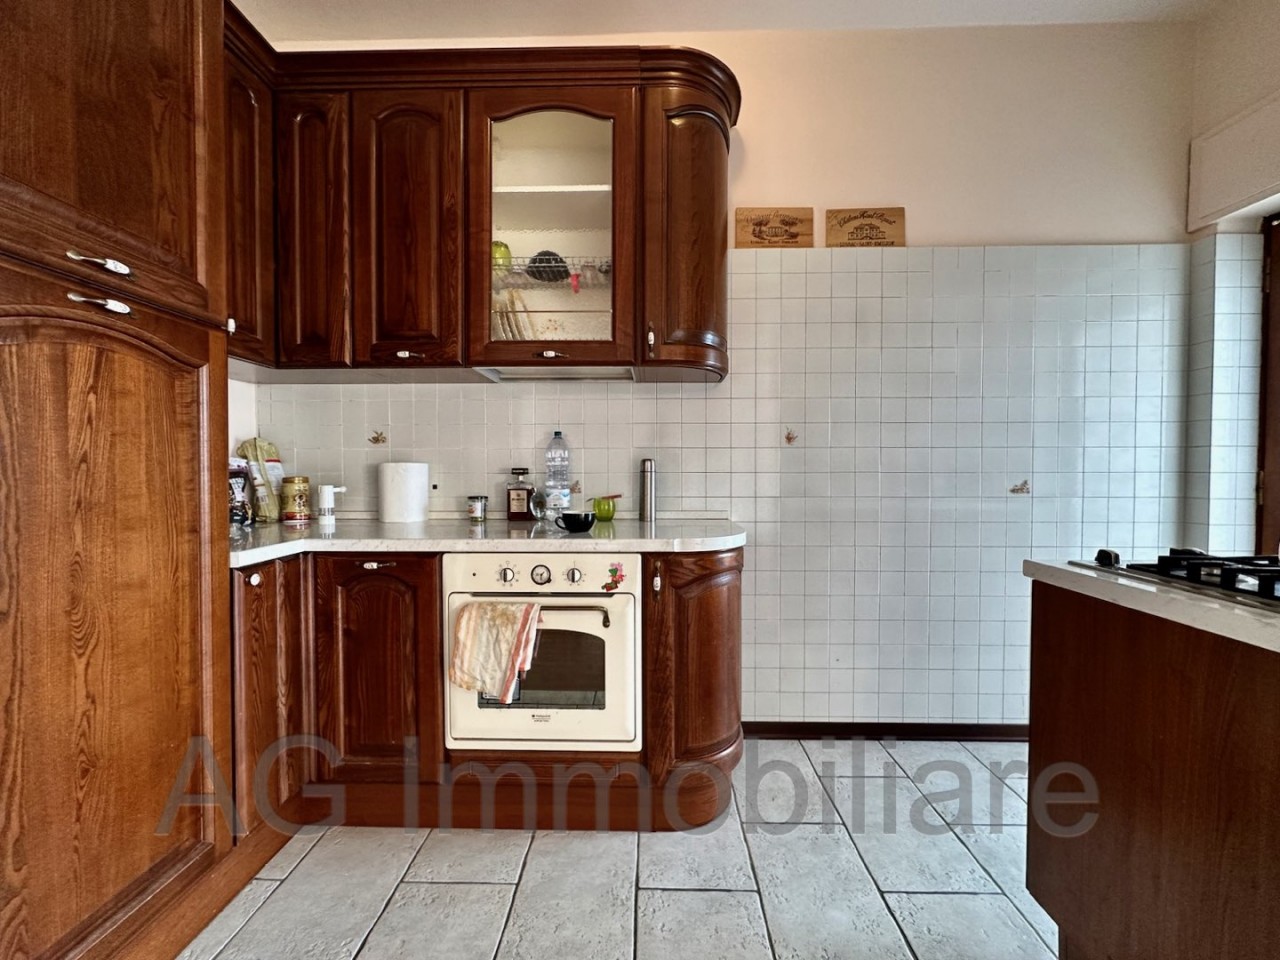 verbania-suna-appartamento-cucina-legno1.jpg